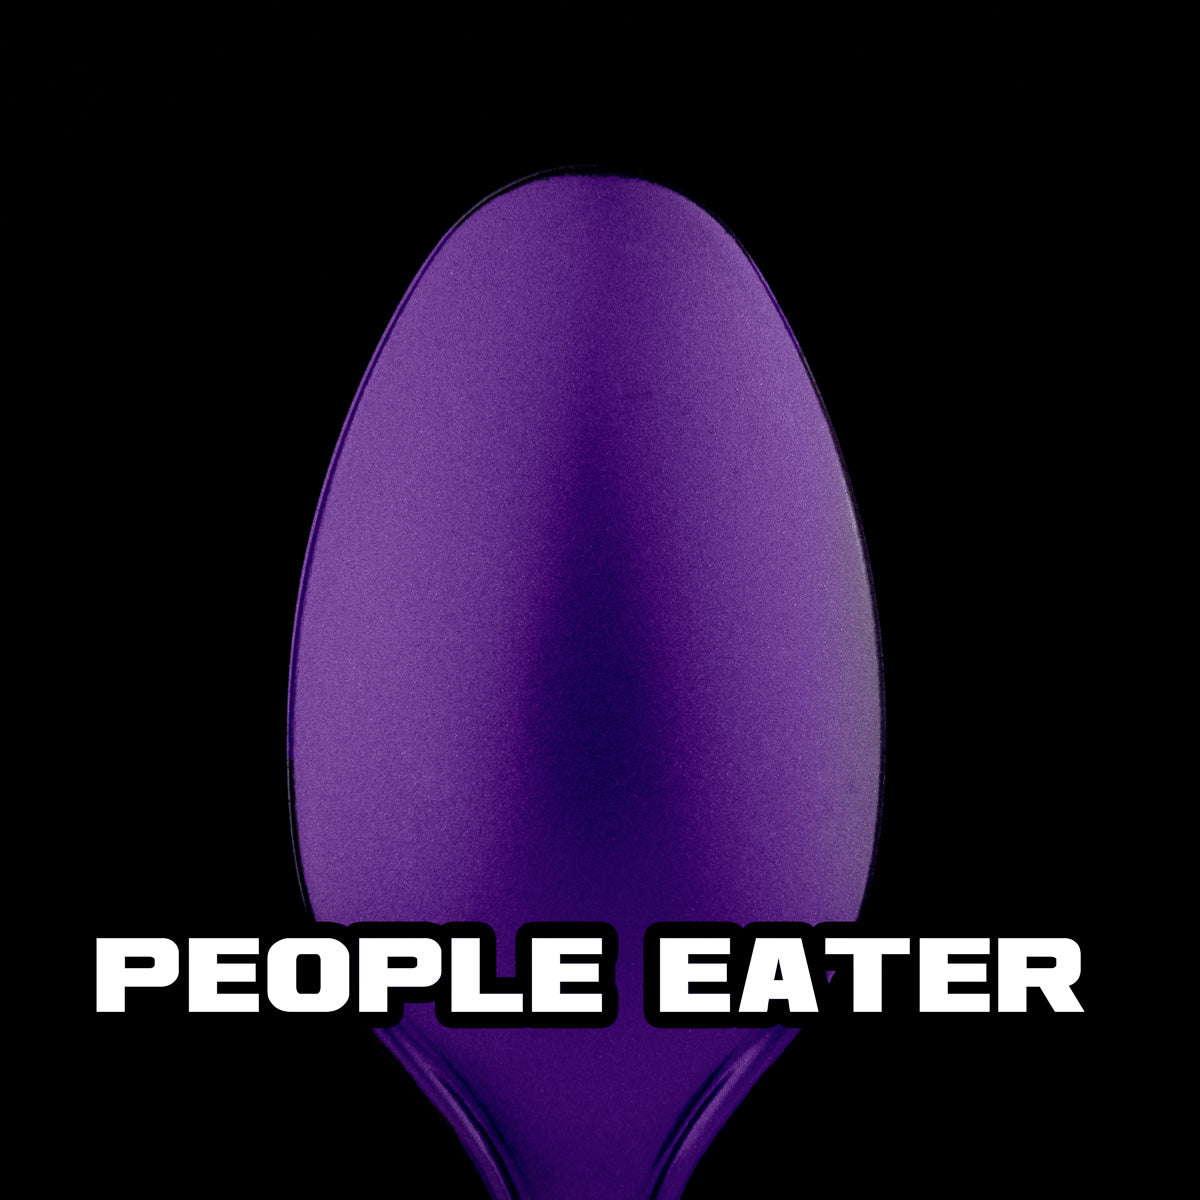 spoon with deep purple metallic paint (People Eater)